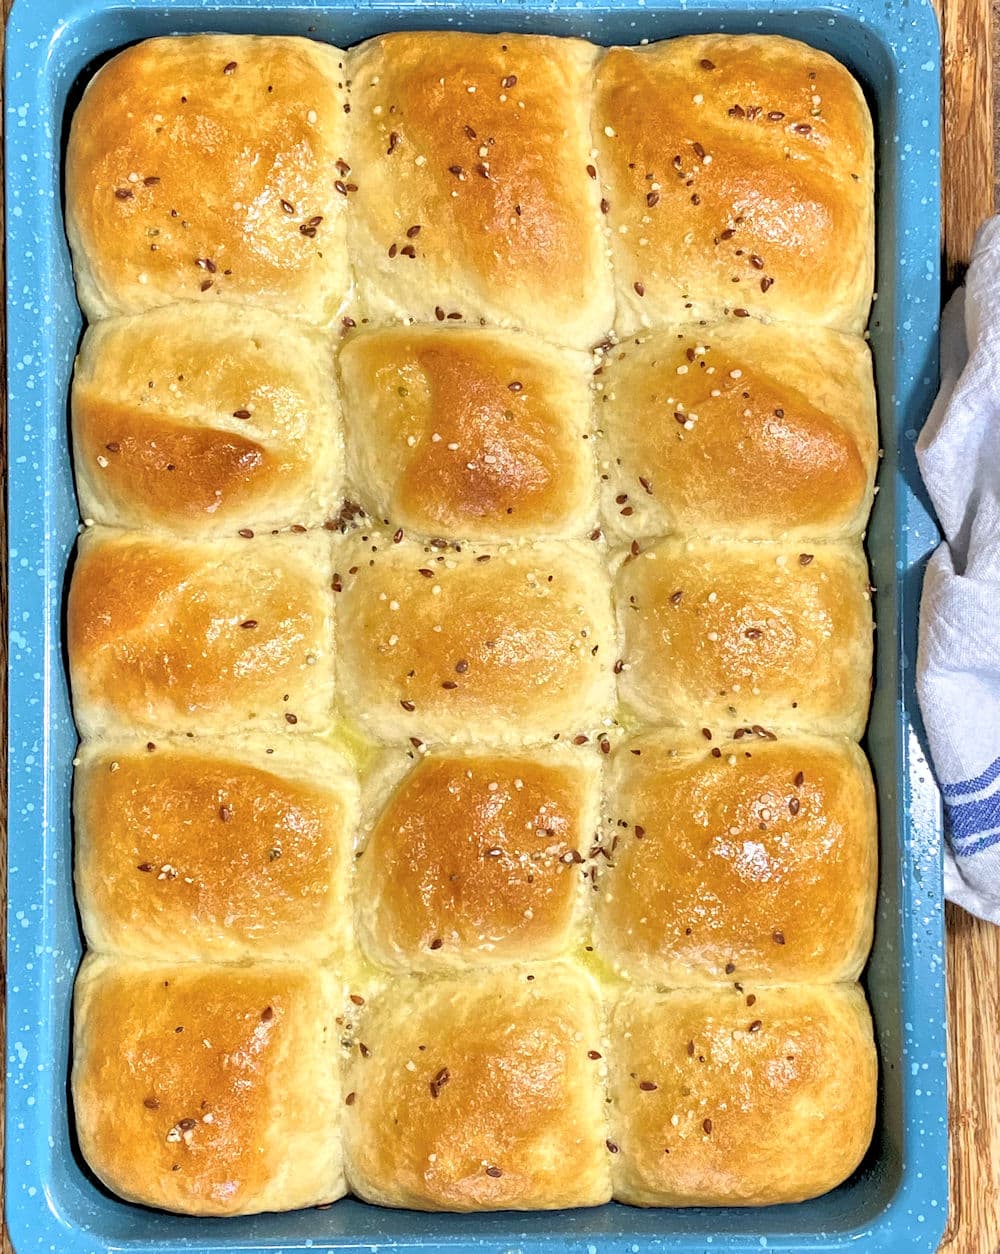 Potato dinner rolls in a blue baking pan.